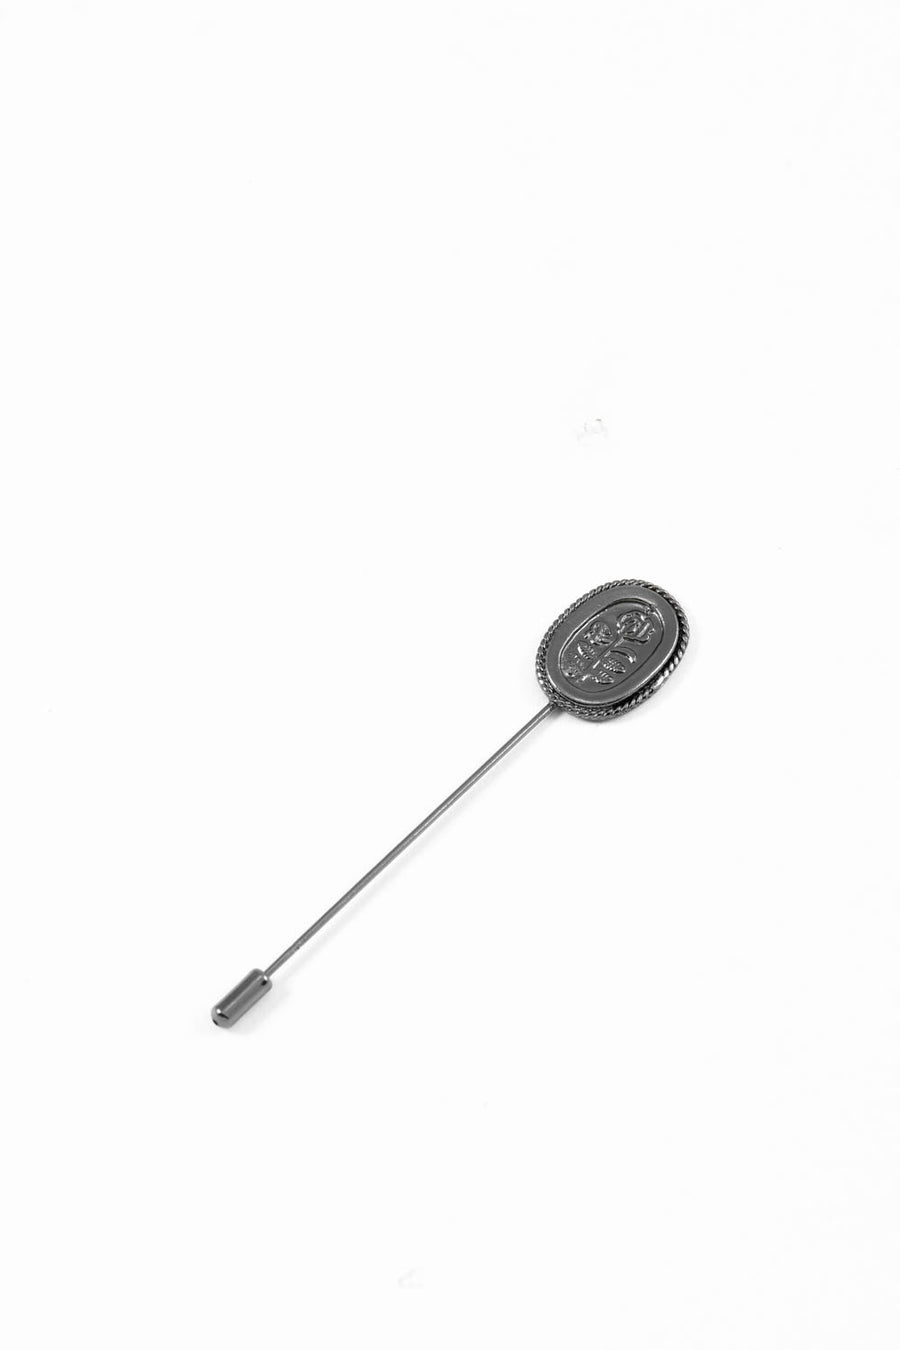 SubRosa Lapel Pin in Gunmetal